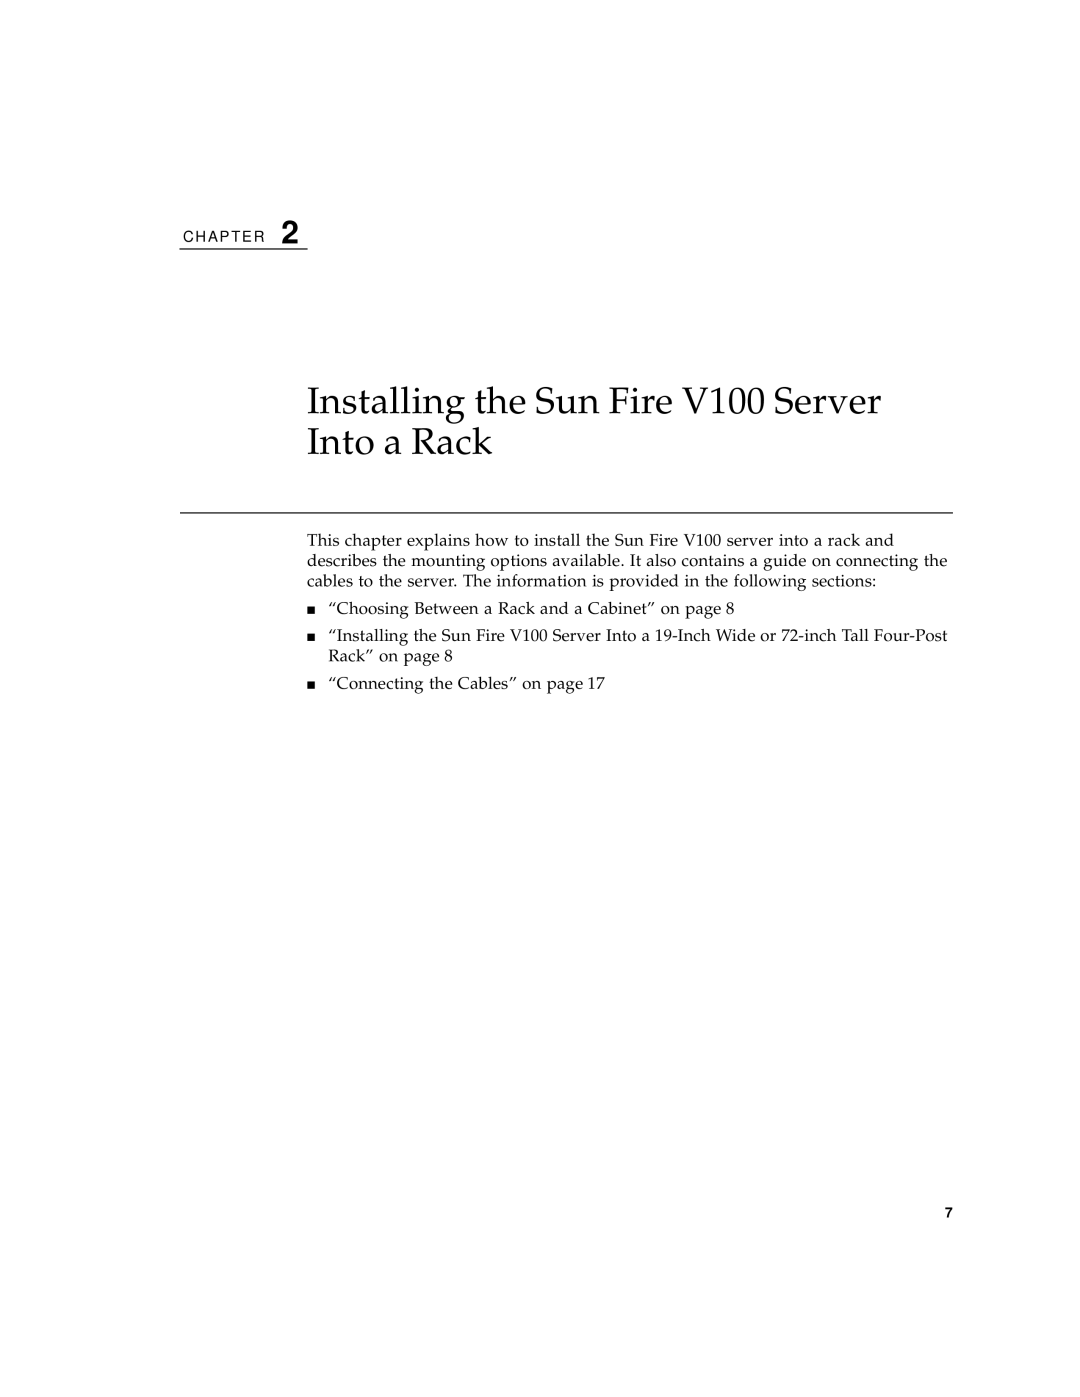 Sun Microsystems manual Installing the Sun Fire V100 Server Into a Rack 